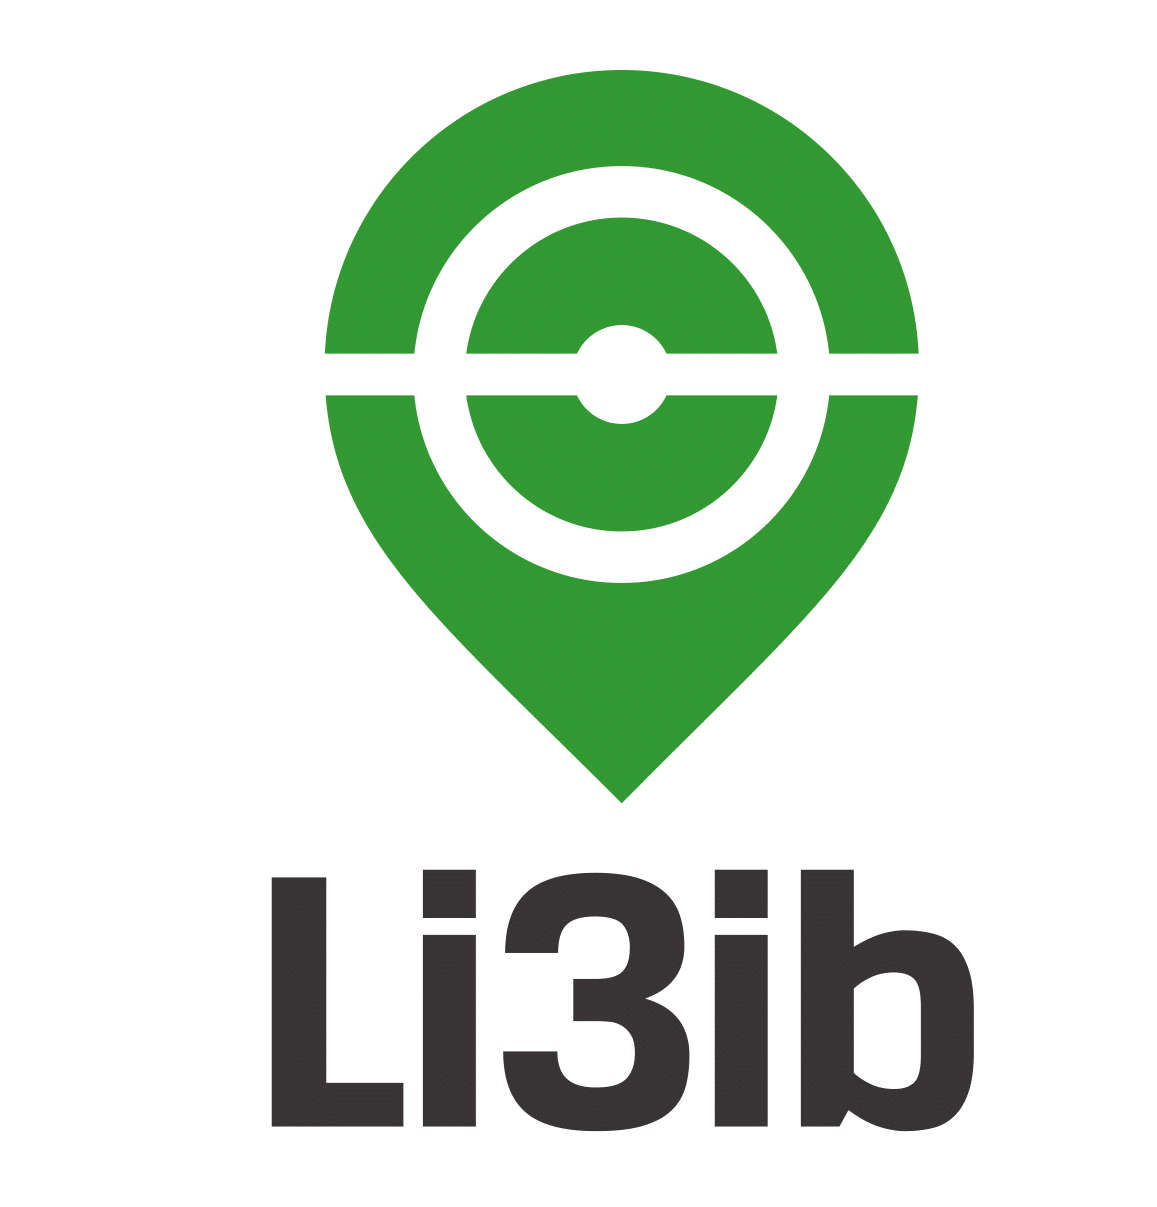 Li3ib - Crunchbase Company Profile & Funding